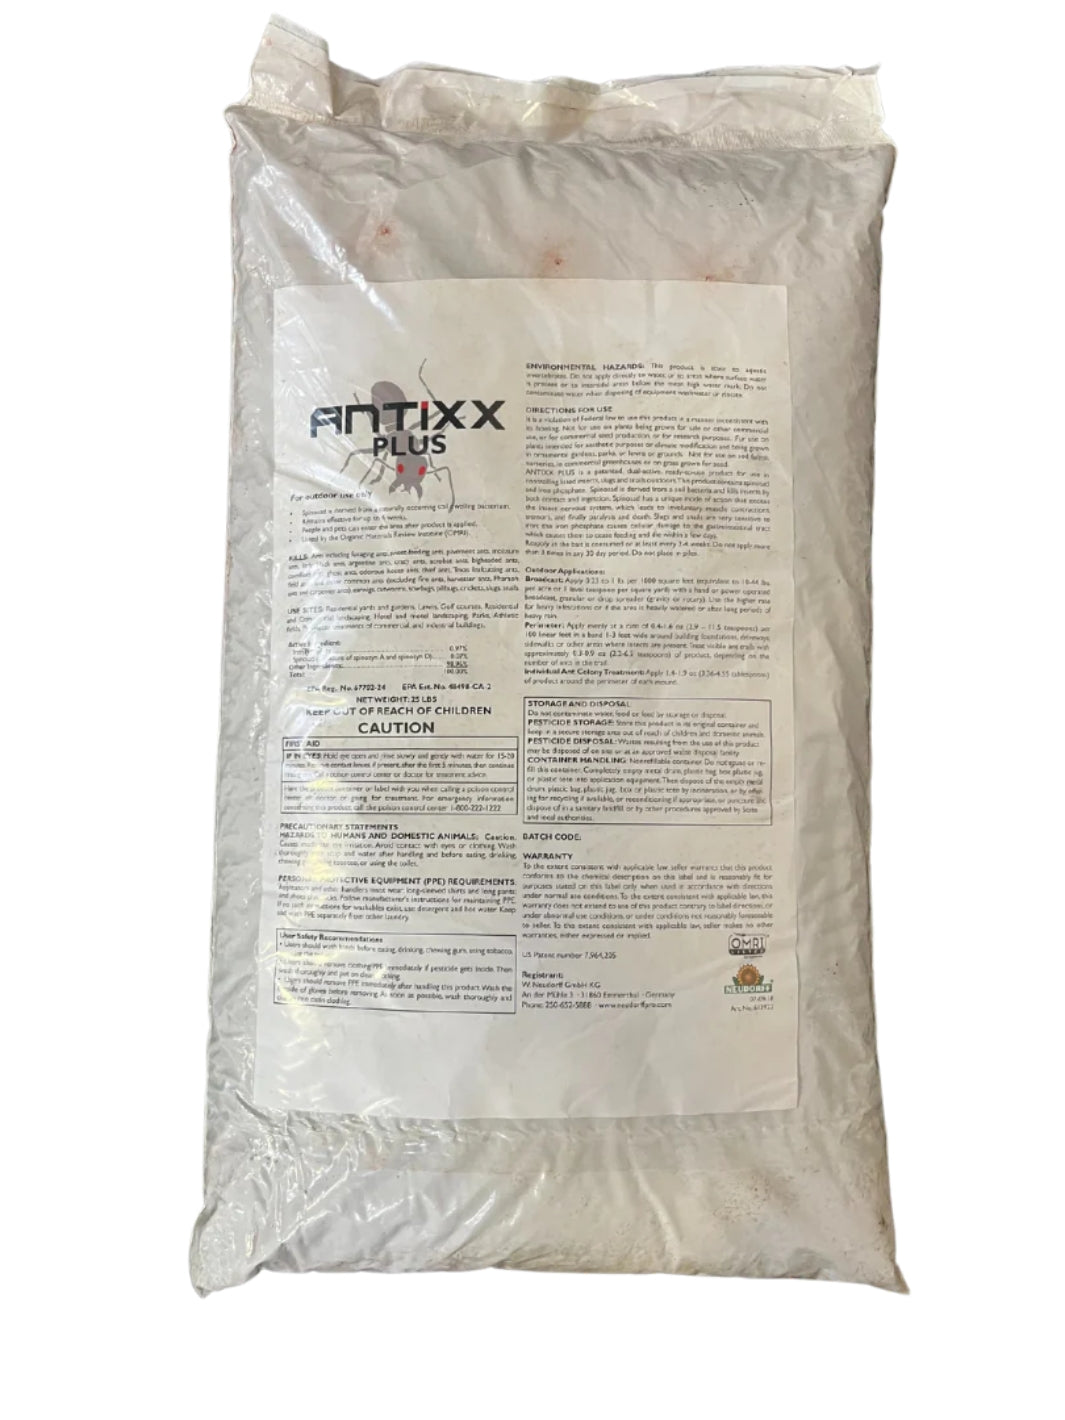 ANTiXX PLUS Granular Ant Killer, Slug, and Snail Bait 25 Pound Bag